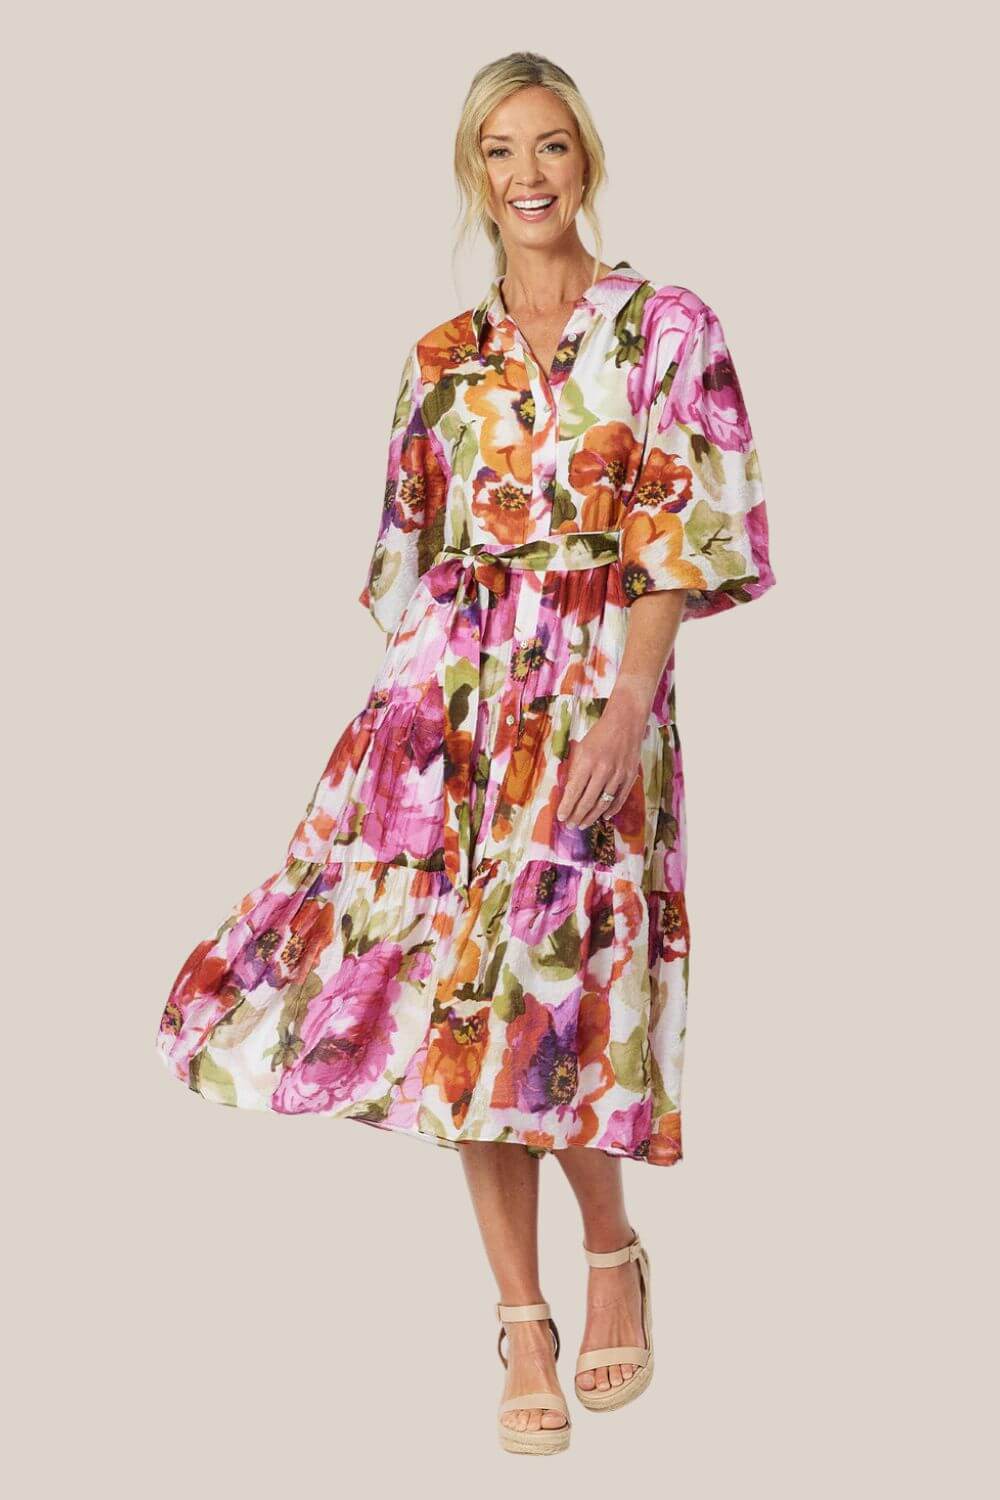 Gordon Smith Maui Floral Dress